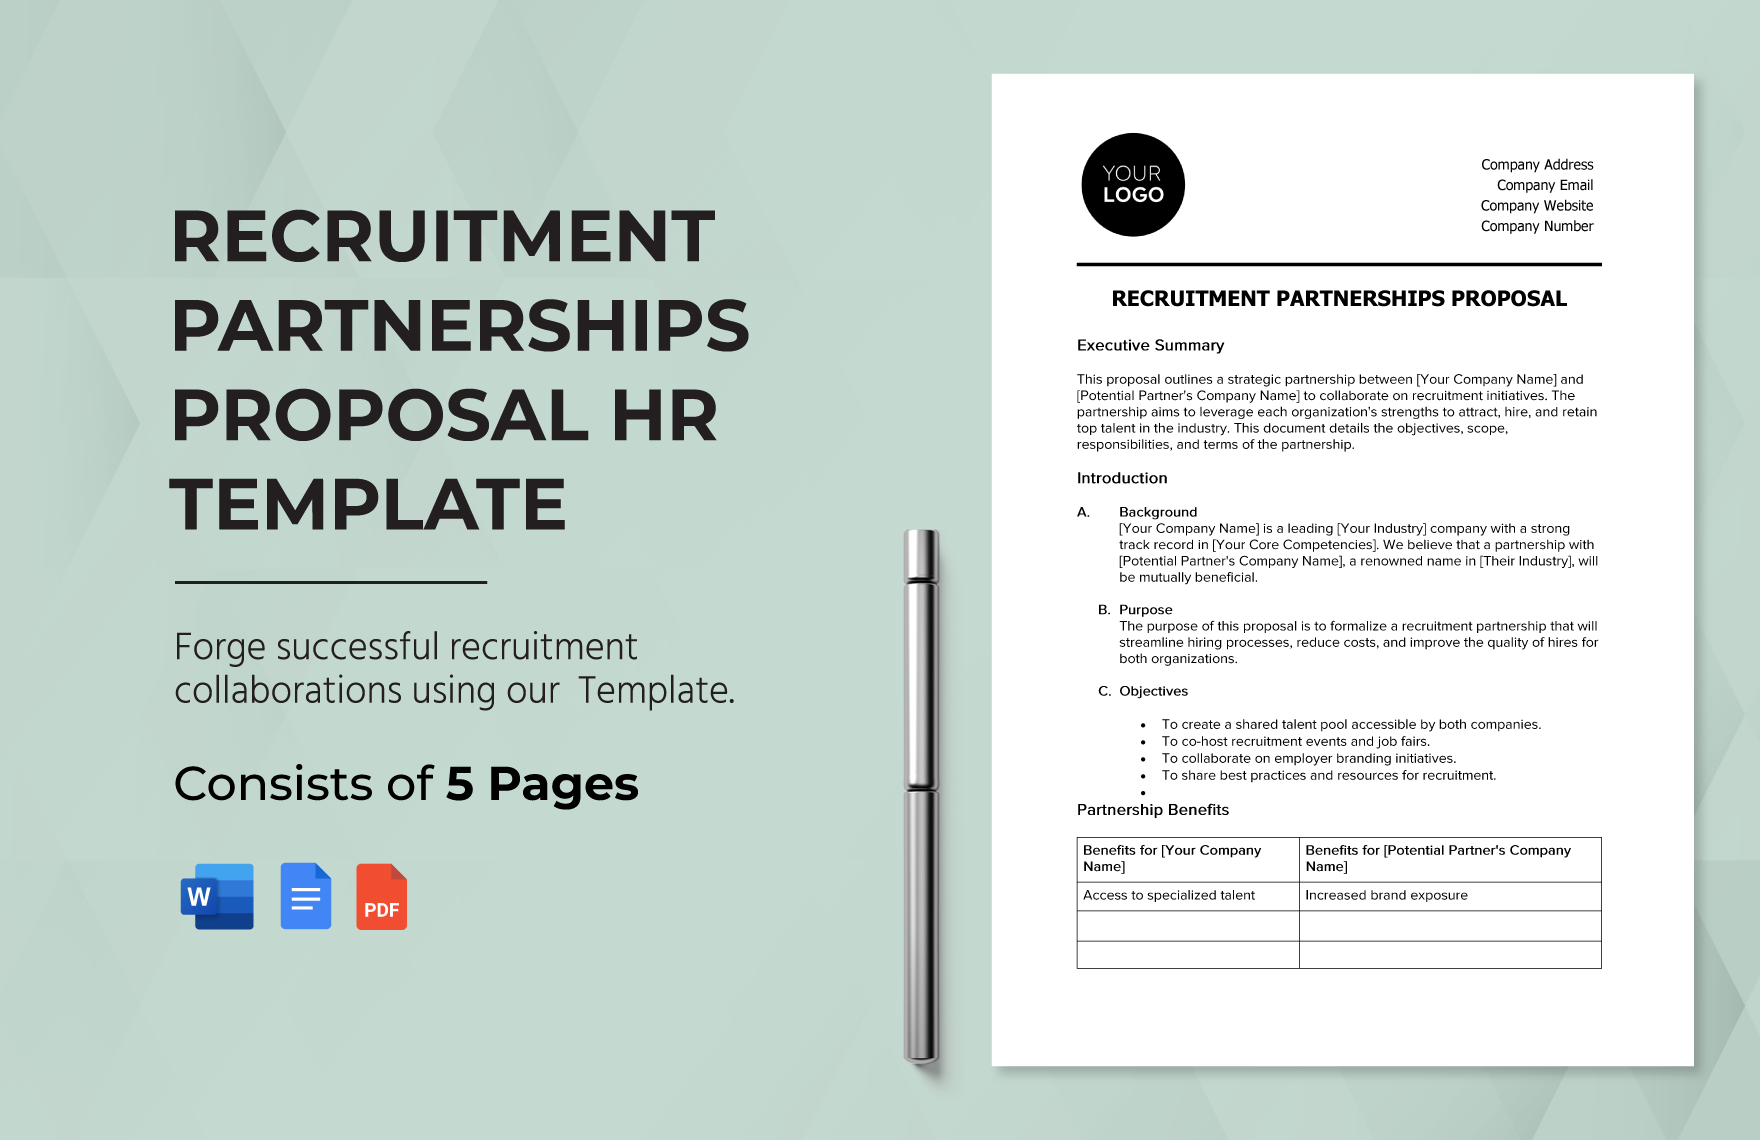 Recruitment Partnerships Proposal HR Template